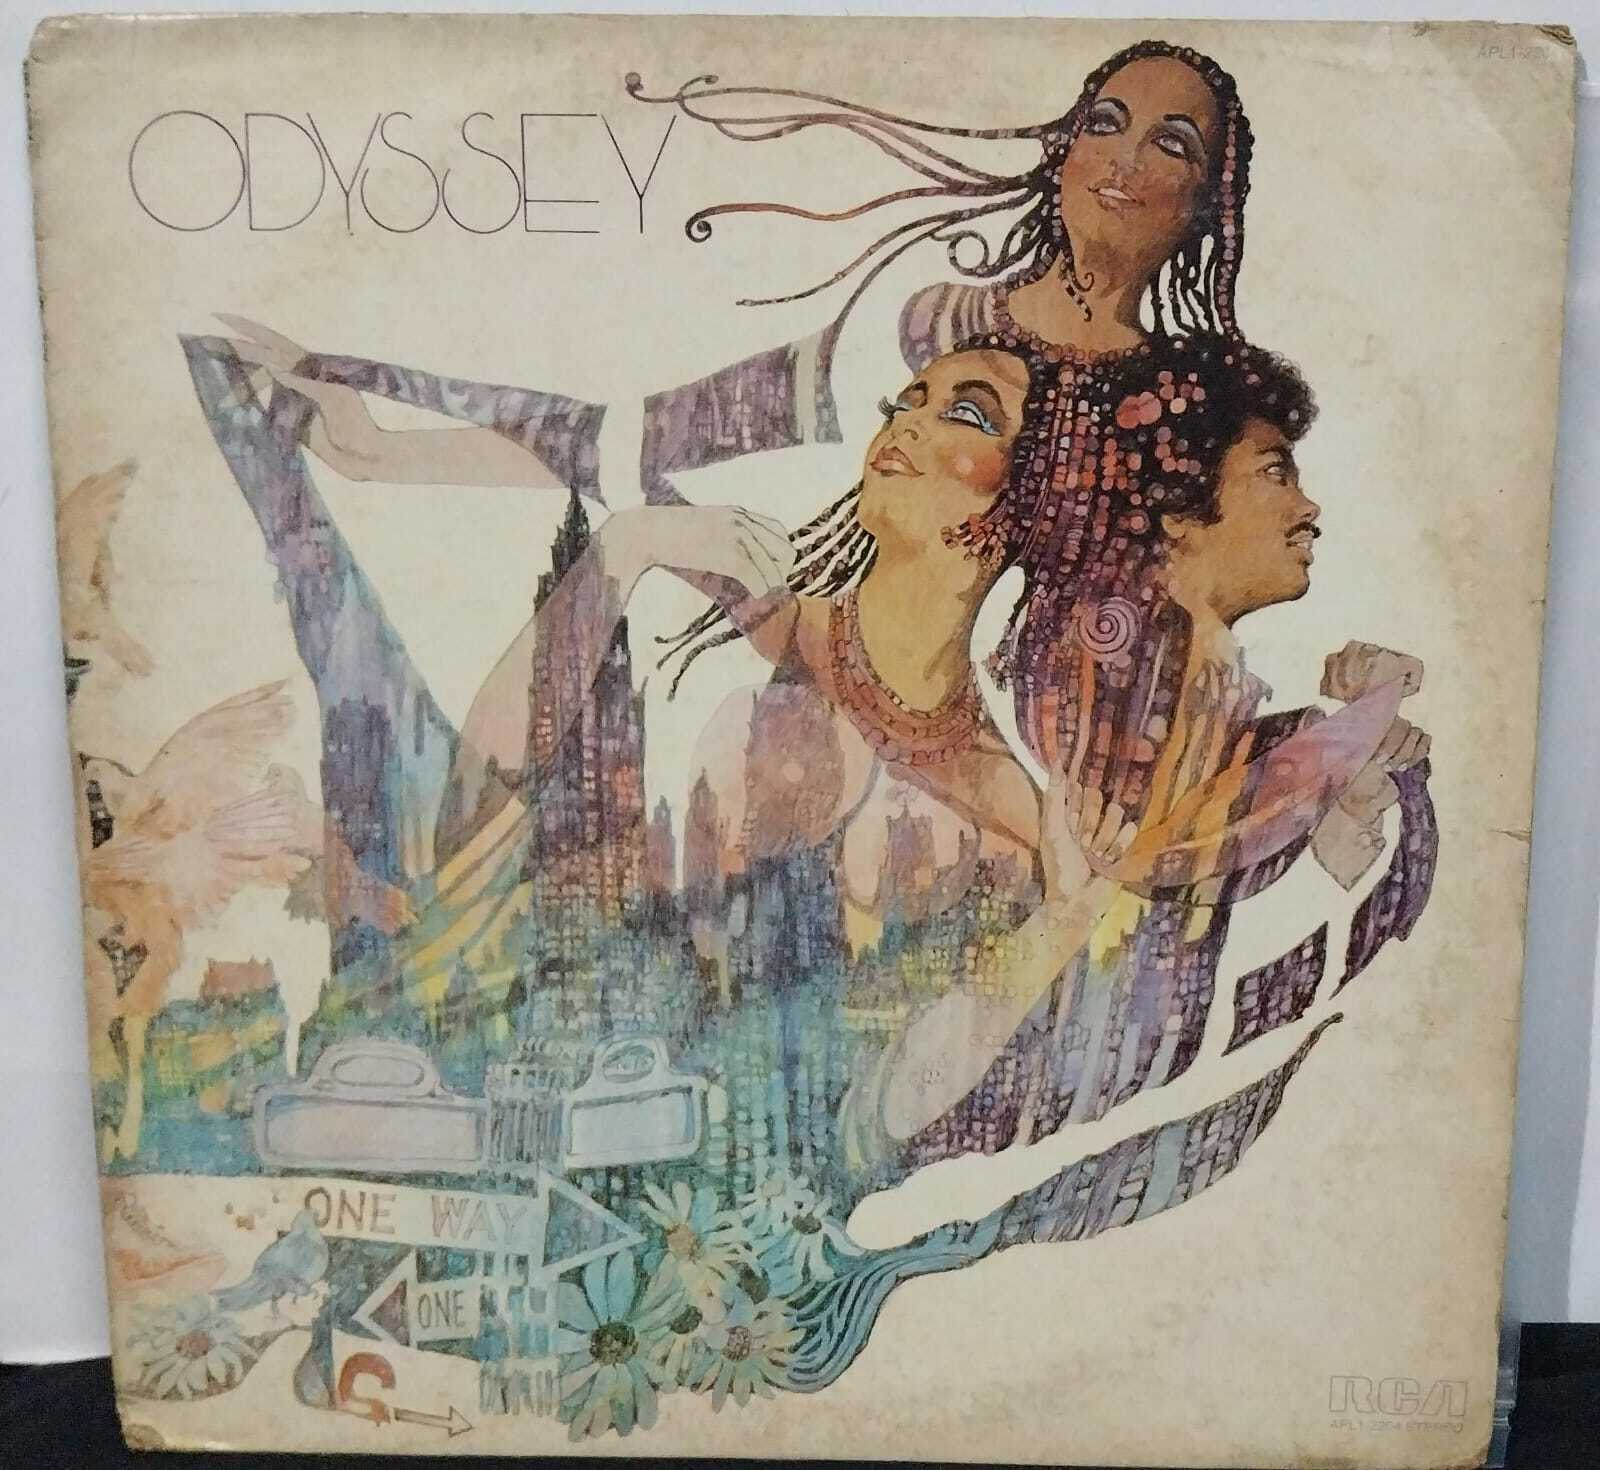 Vini - Odyssey - 1977 (USA)